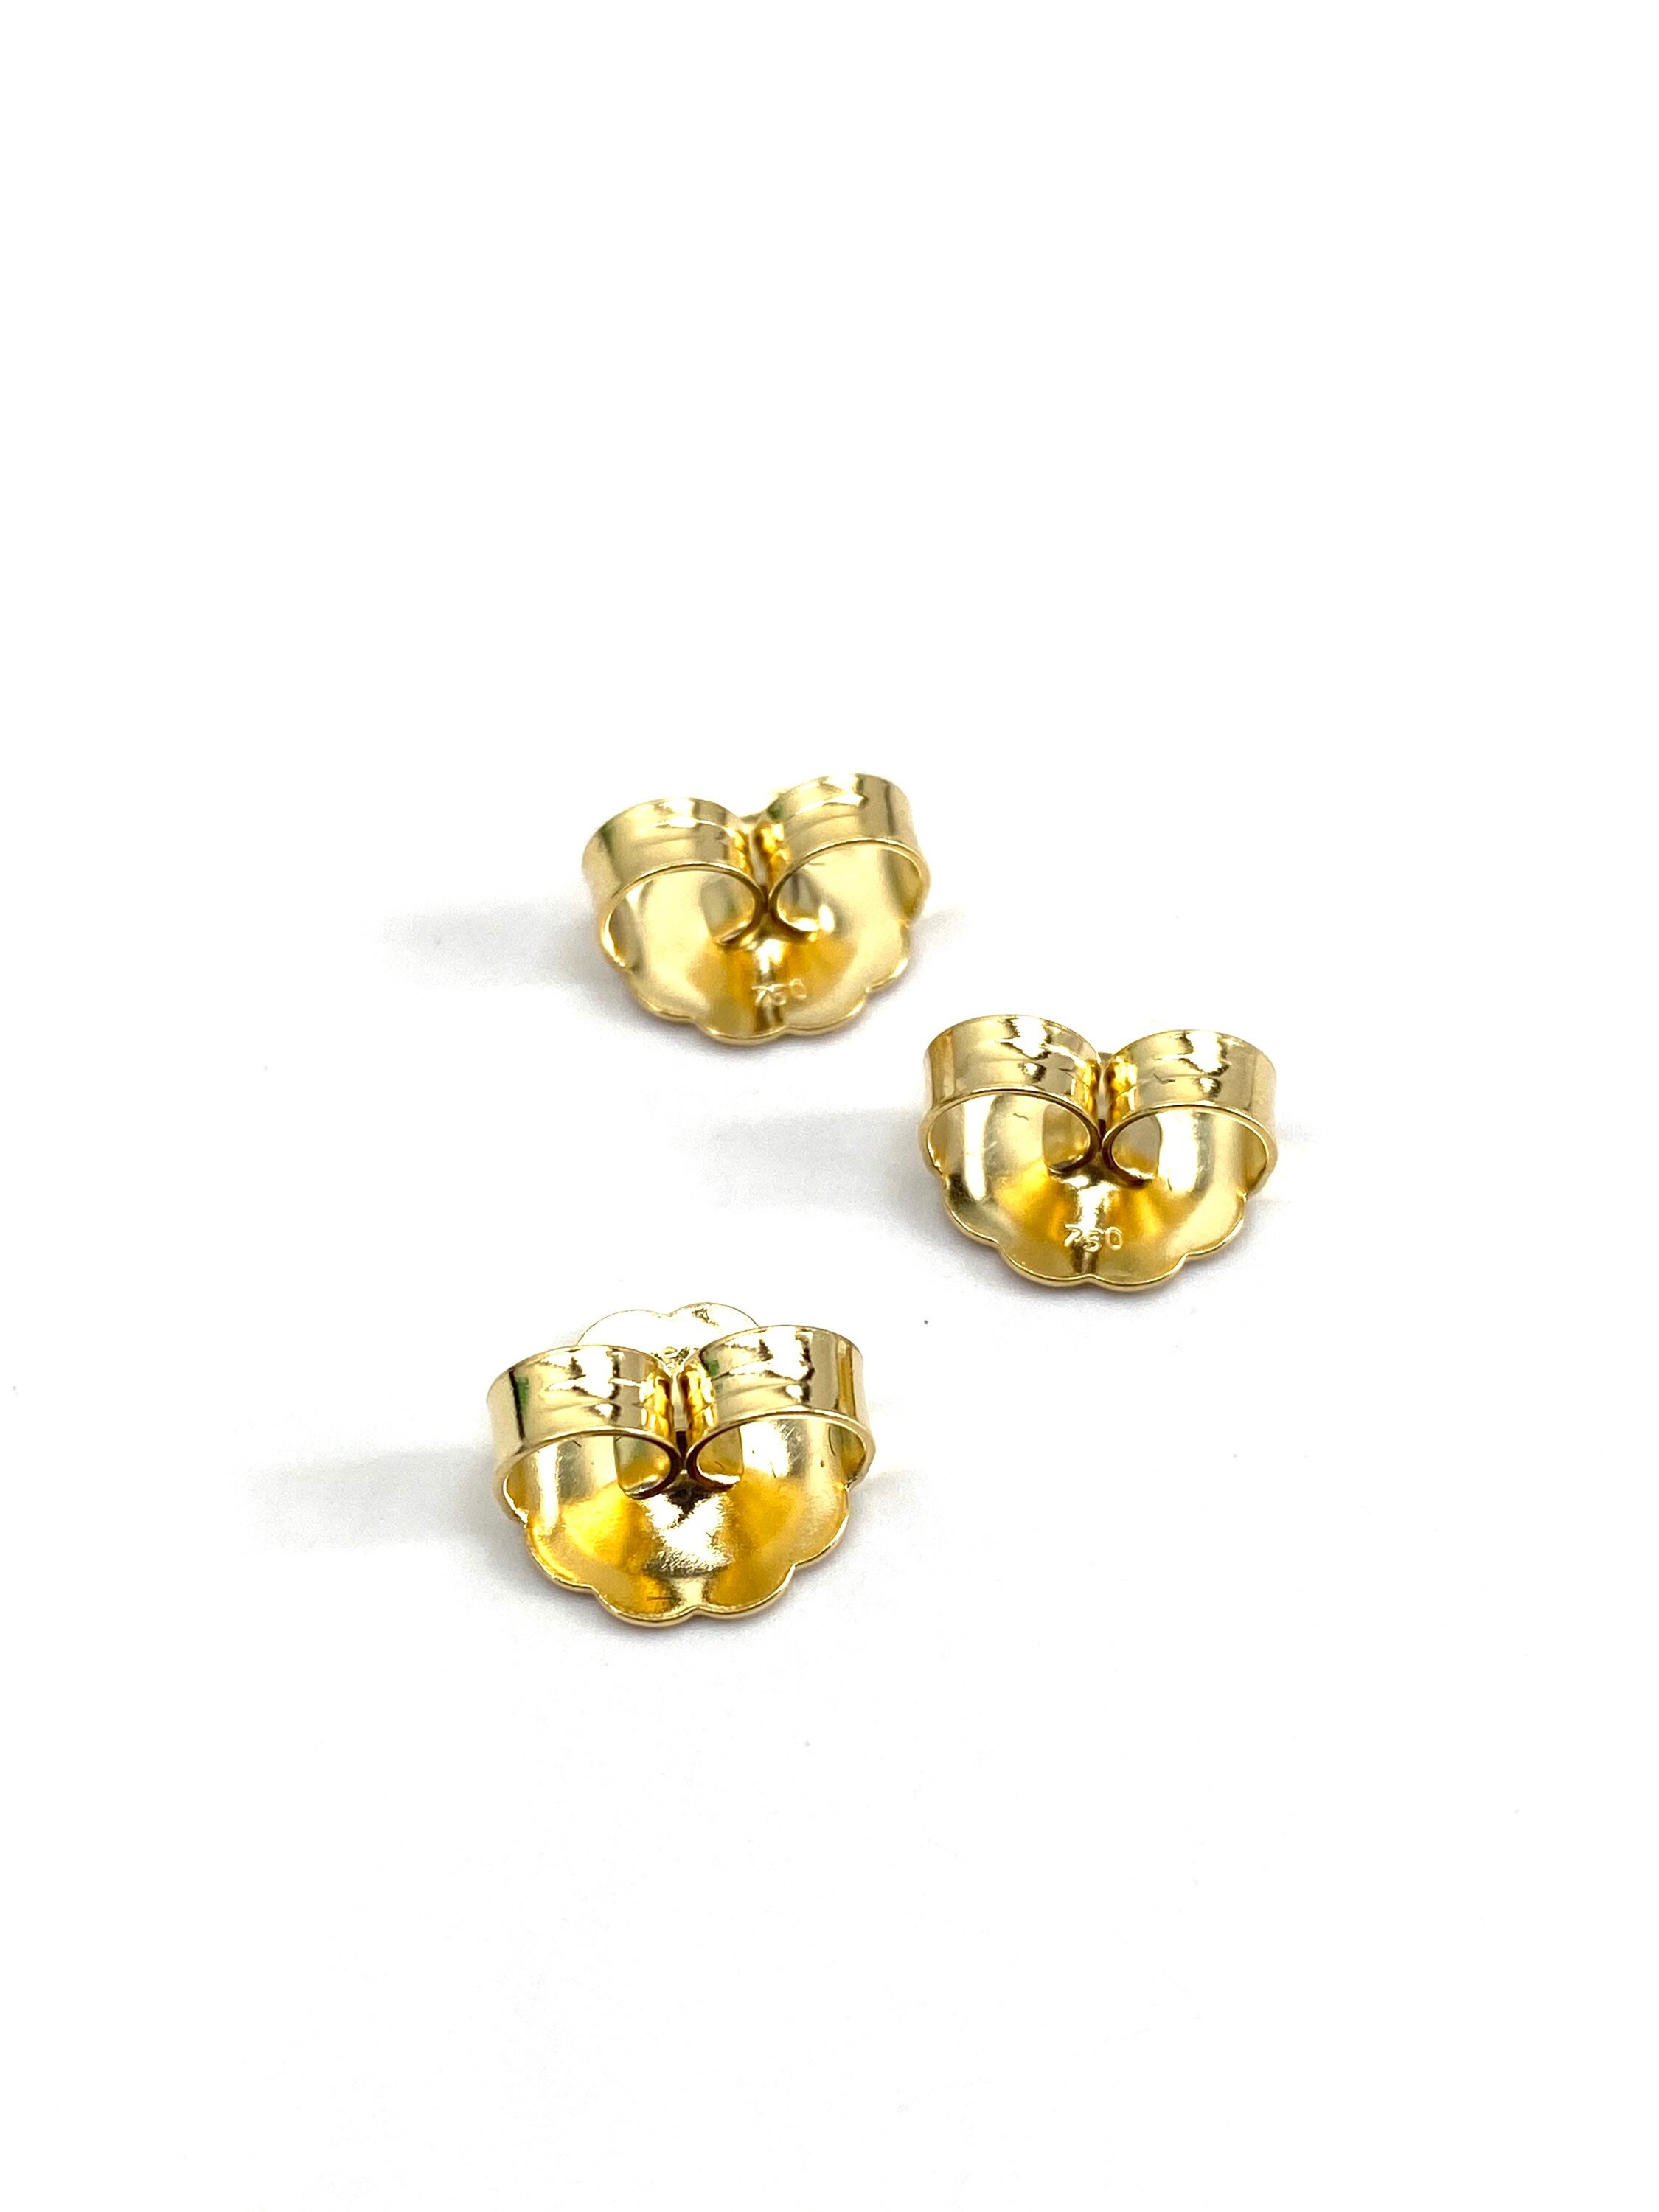 14K Solid Yellow Gold Earring Backing, SKU18-27-20 